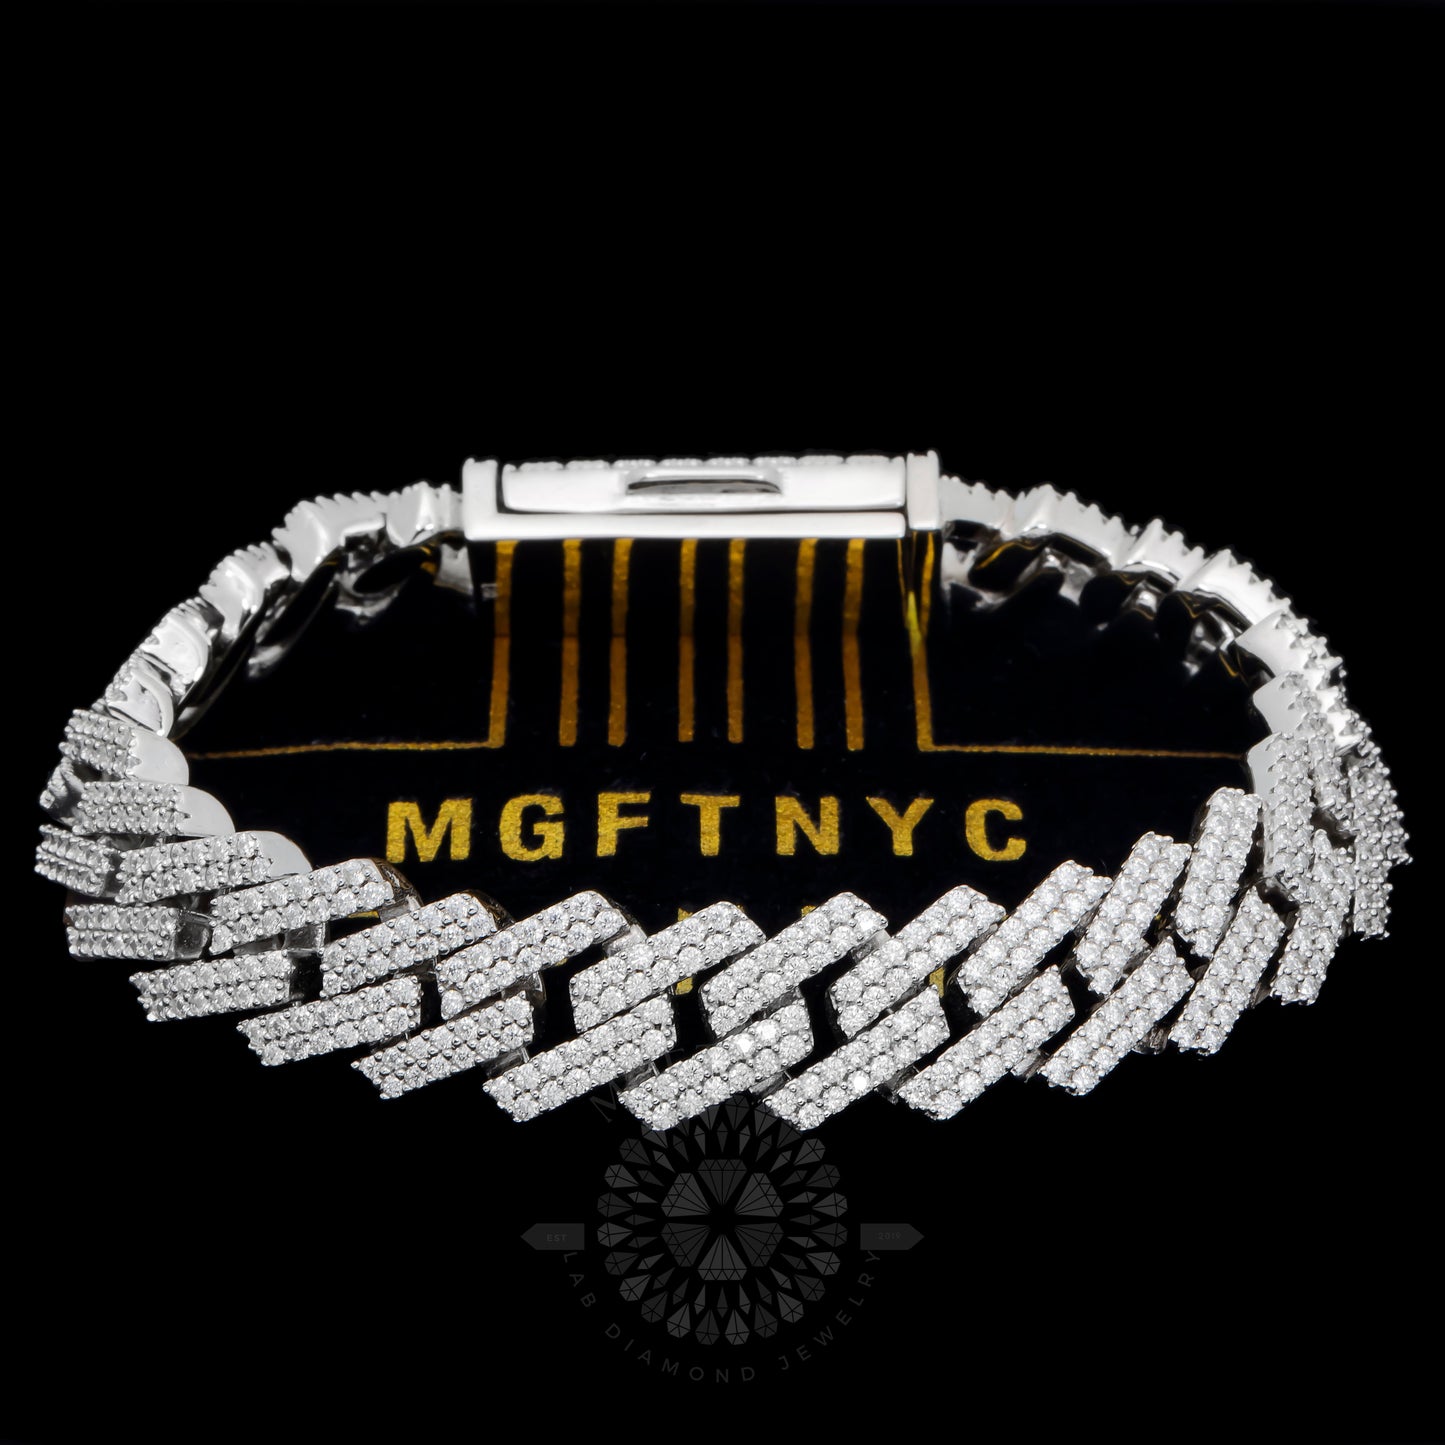 12MM Diamond Cuban Chain And Bracelet Set 18 CT